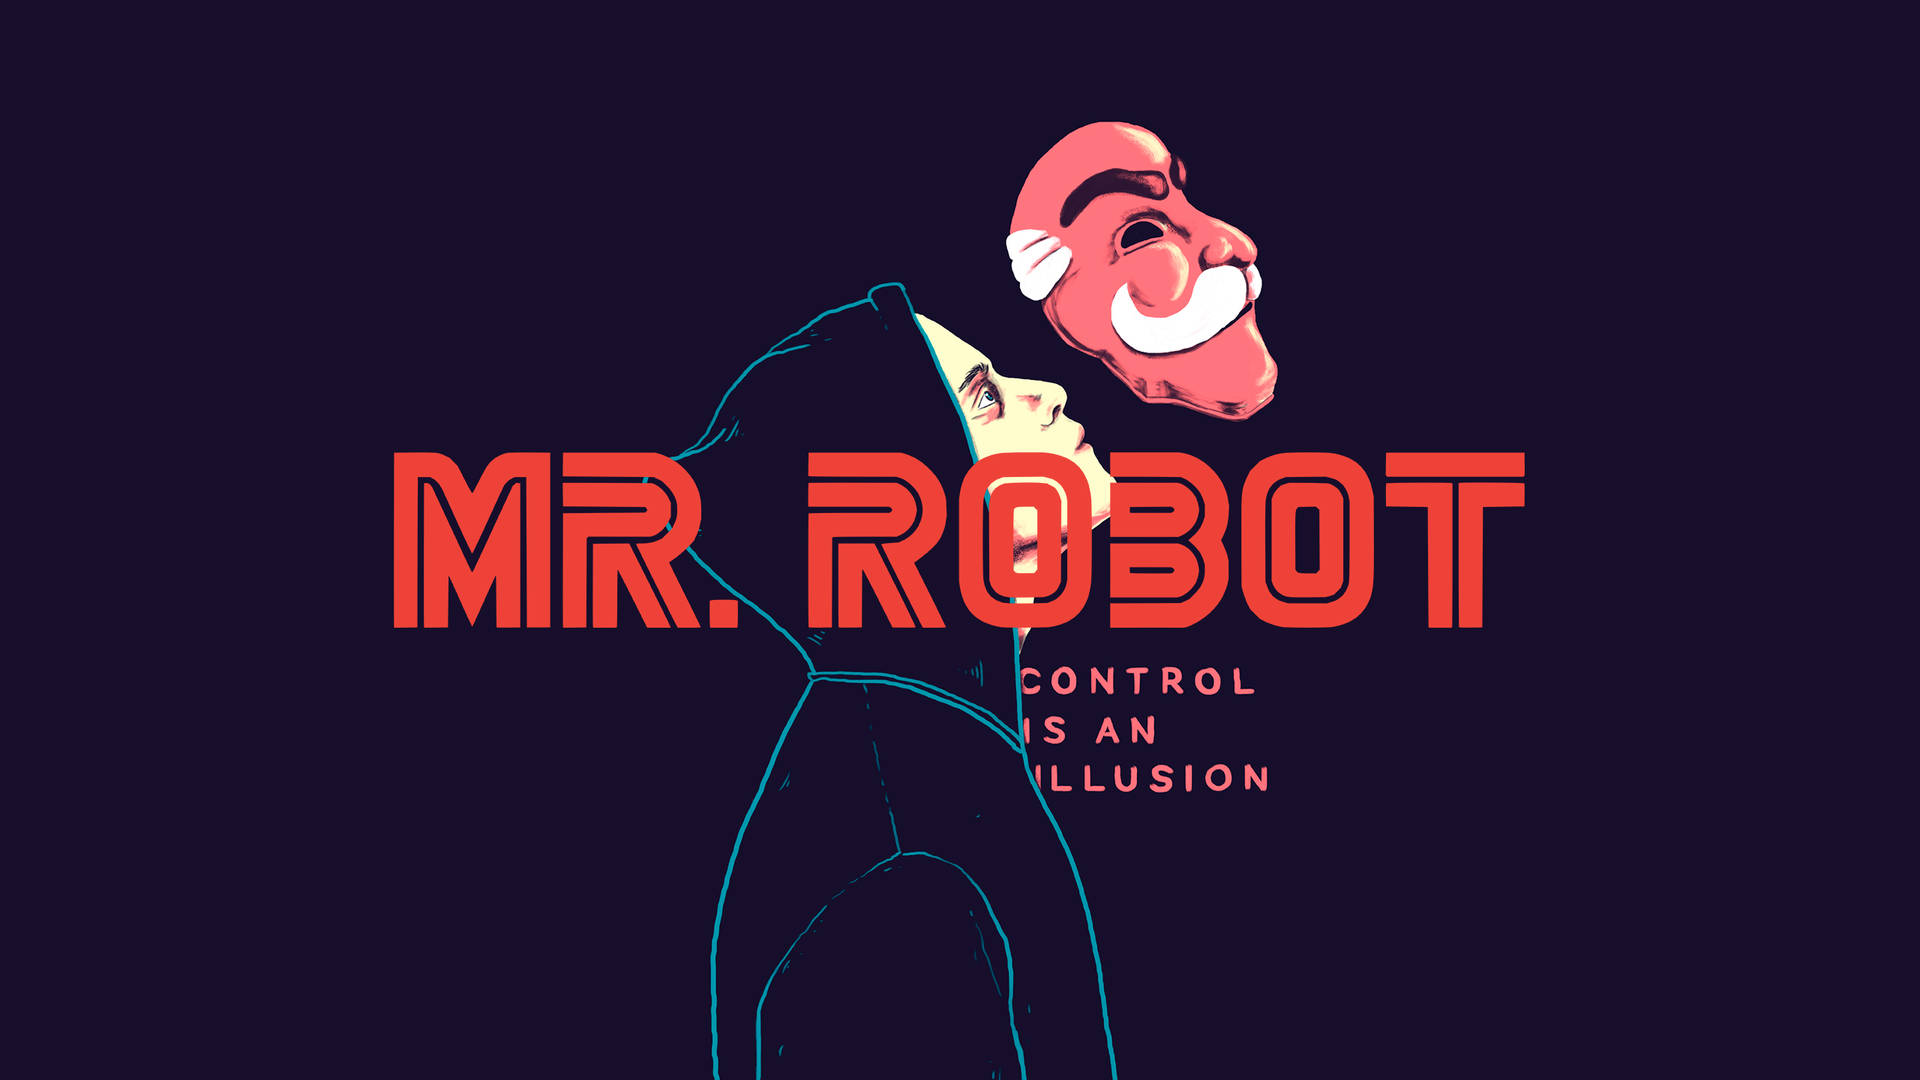 Mr. Robot Control Illusion Background